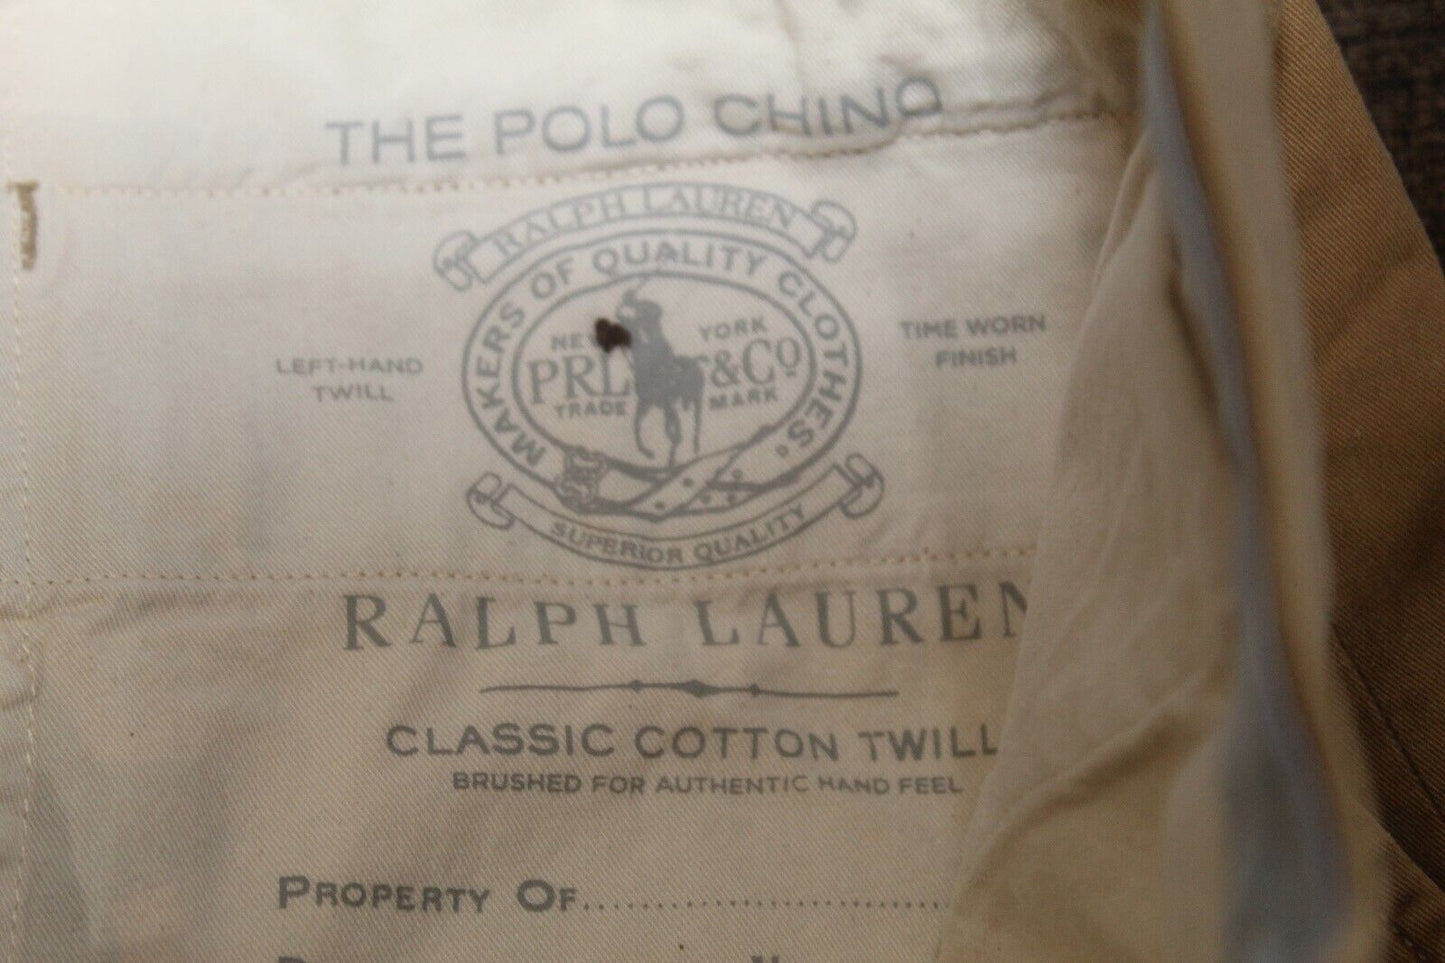 *NWT*  $75.Polo Ralph Lauren Men Grey Chino Shorts Stretch Classic Fit 9" Siz 38